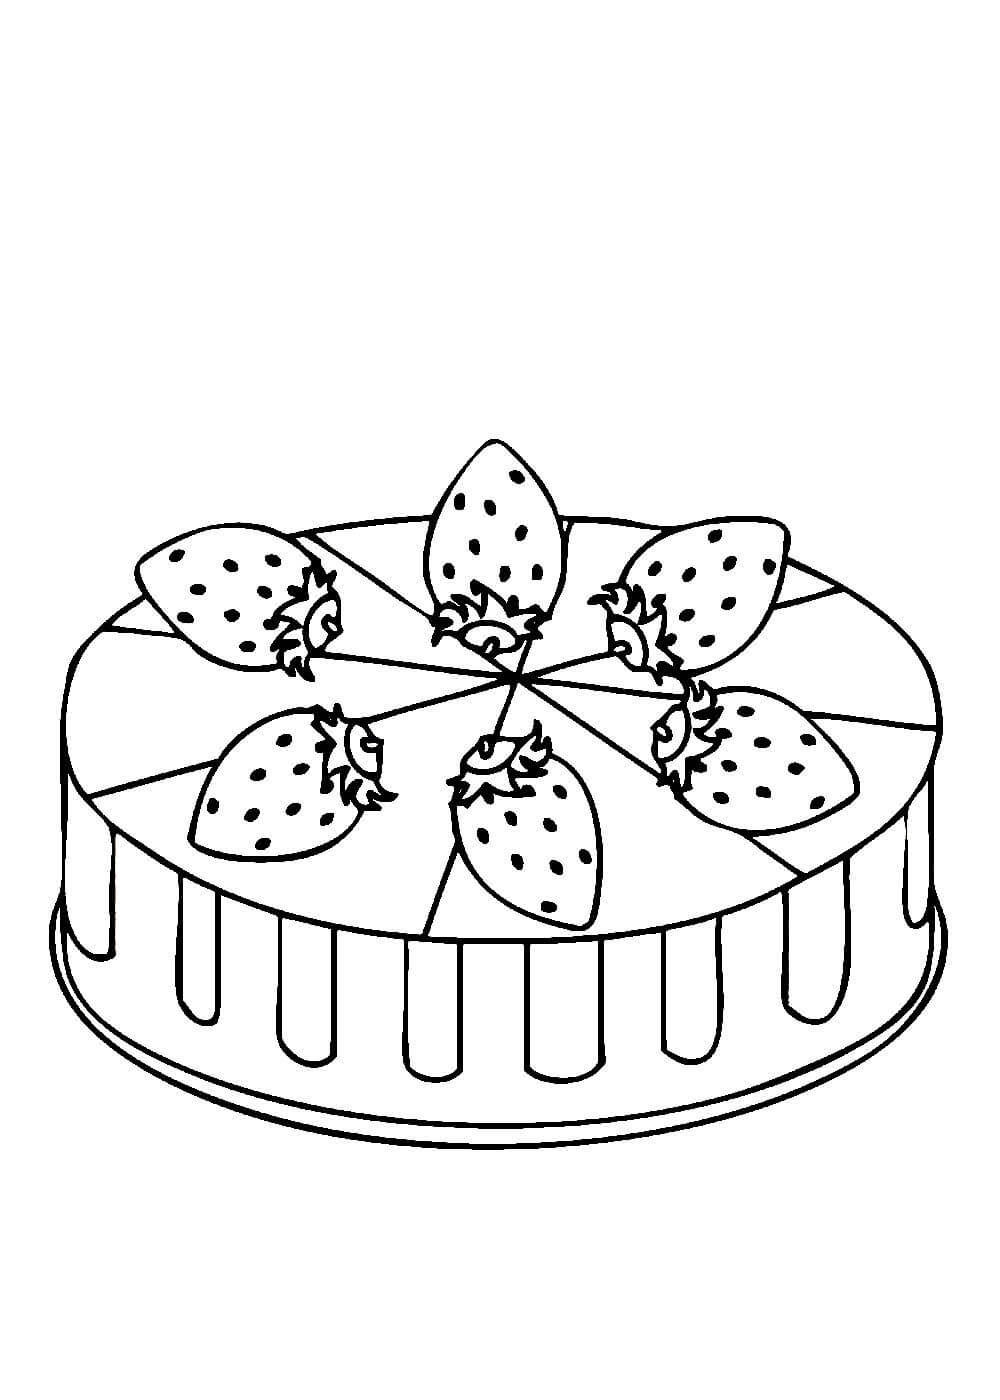 Торт с рисунком своими руками - 57 фото